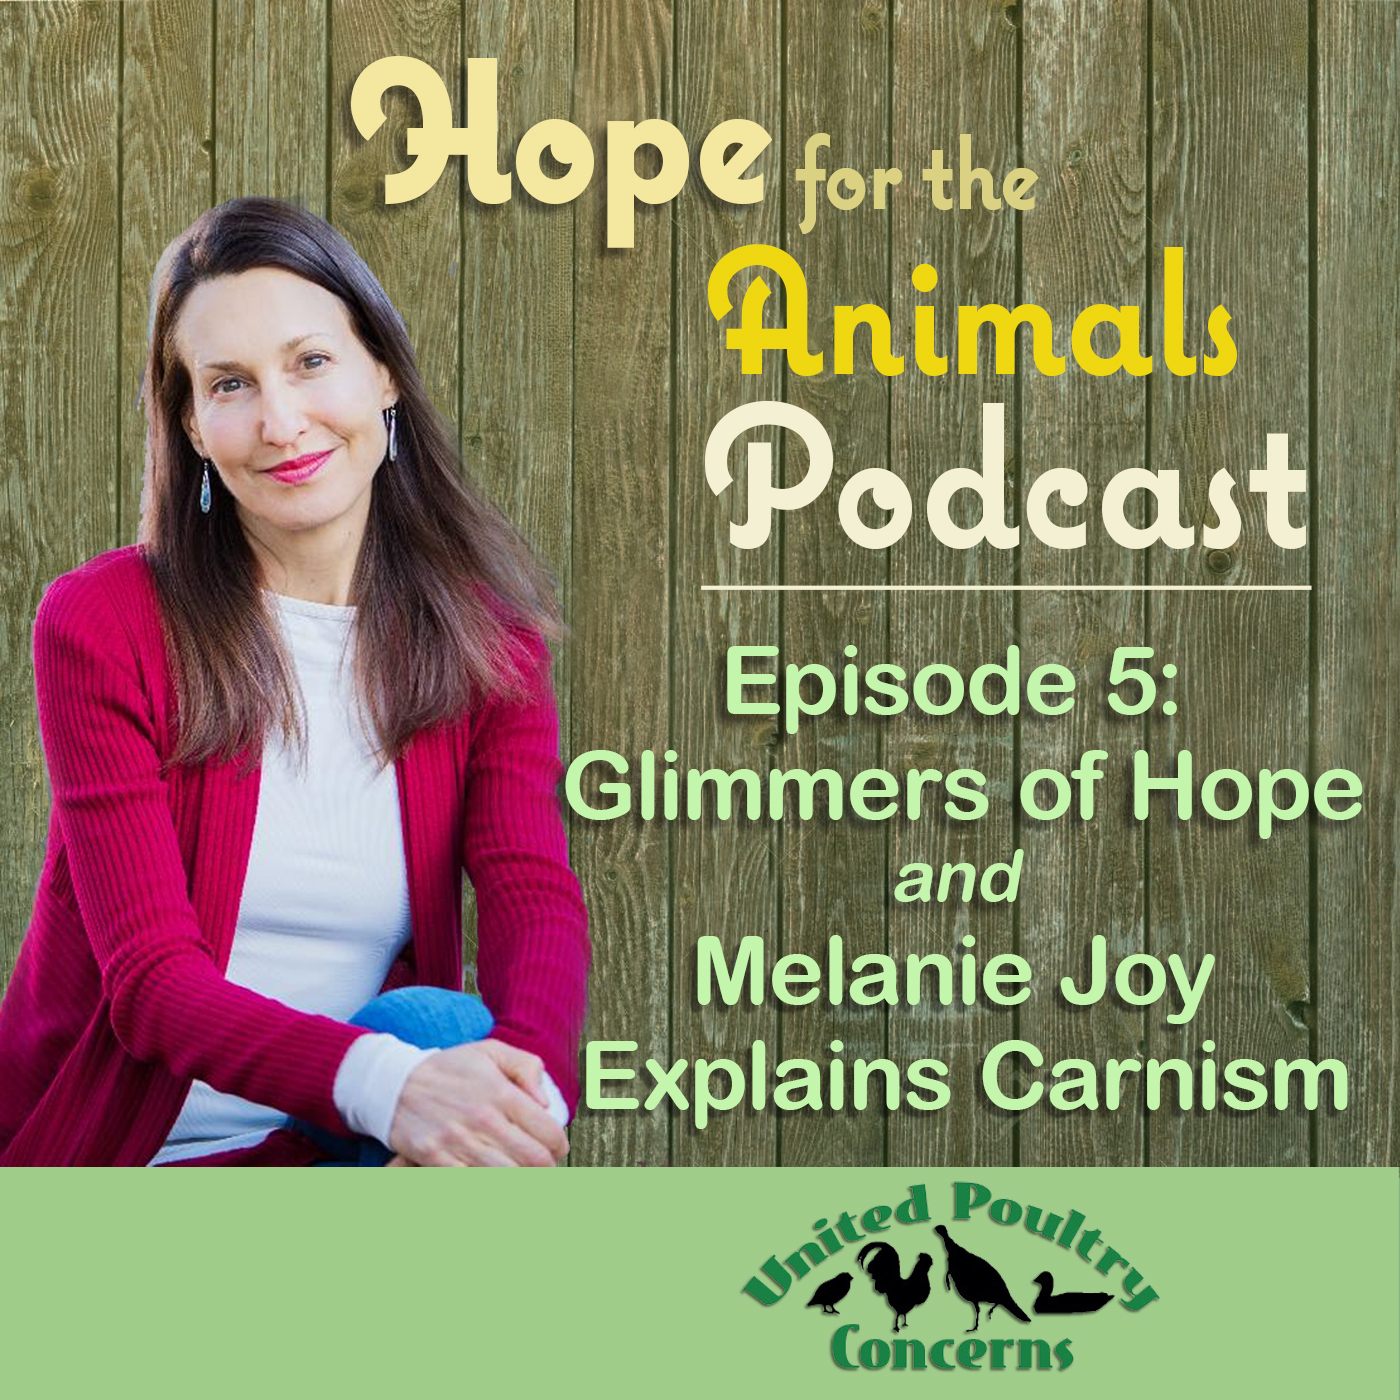 Episode 5: A Glimmer of Hope and Dr. Melanie Joy Explains Carnism